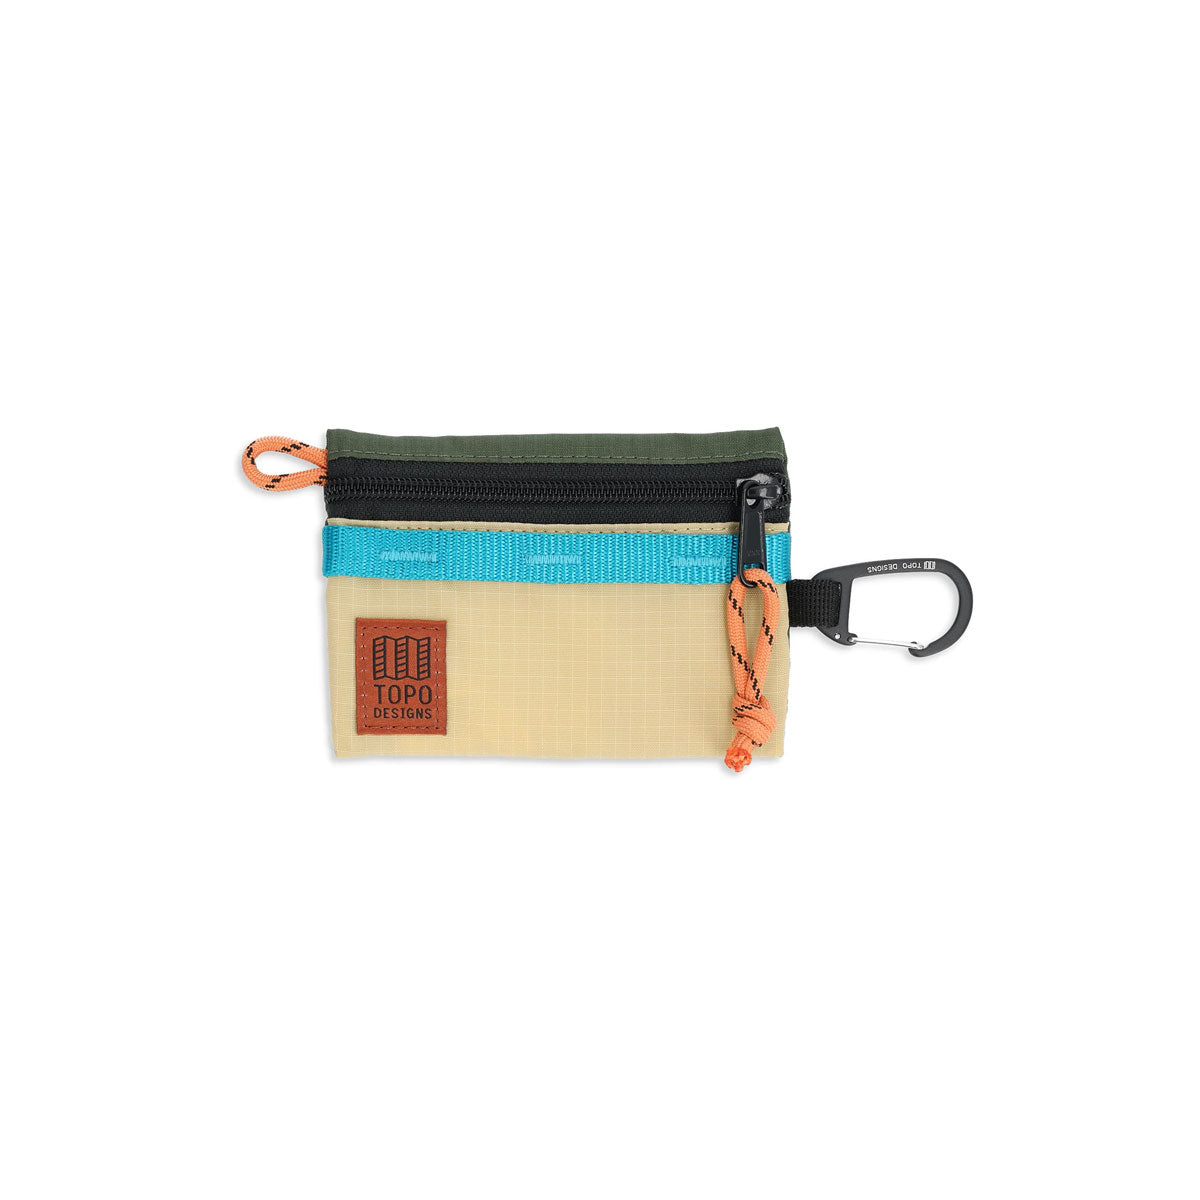 Topo Designs : Mountain Accessory Bag : Olive/Hemp